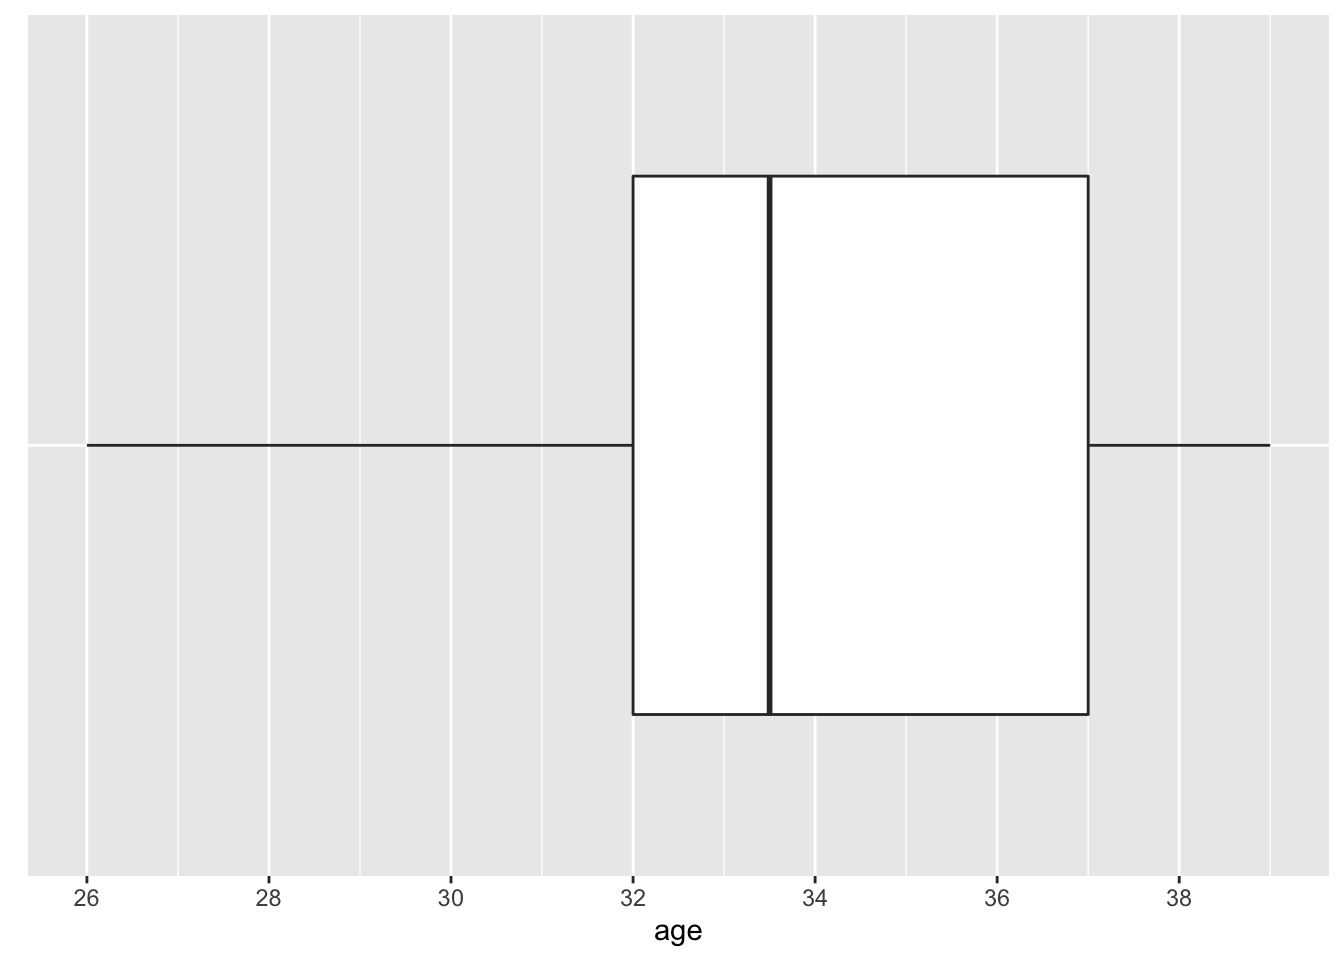 Distribution of Age---COVID-19 Study: Boxplot